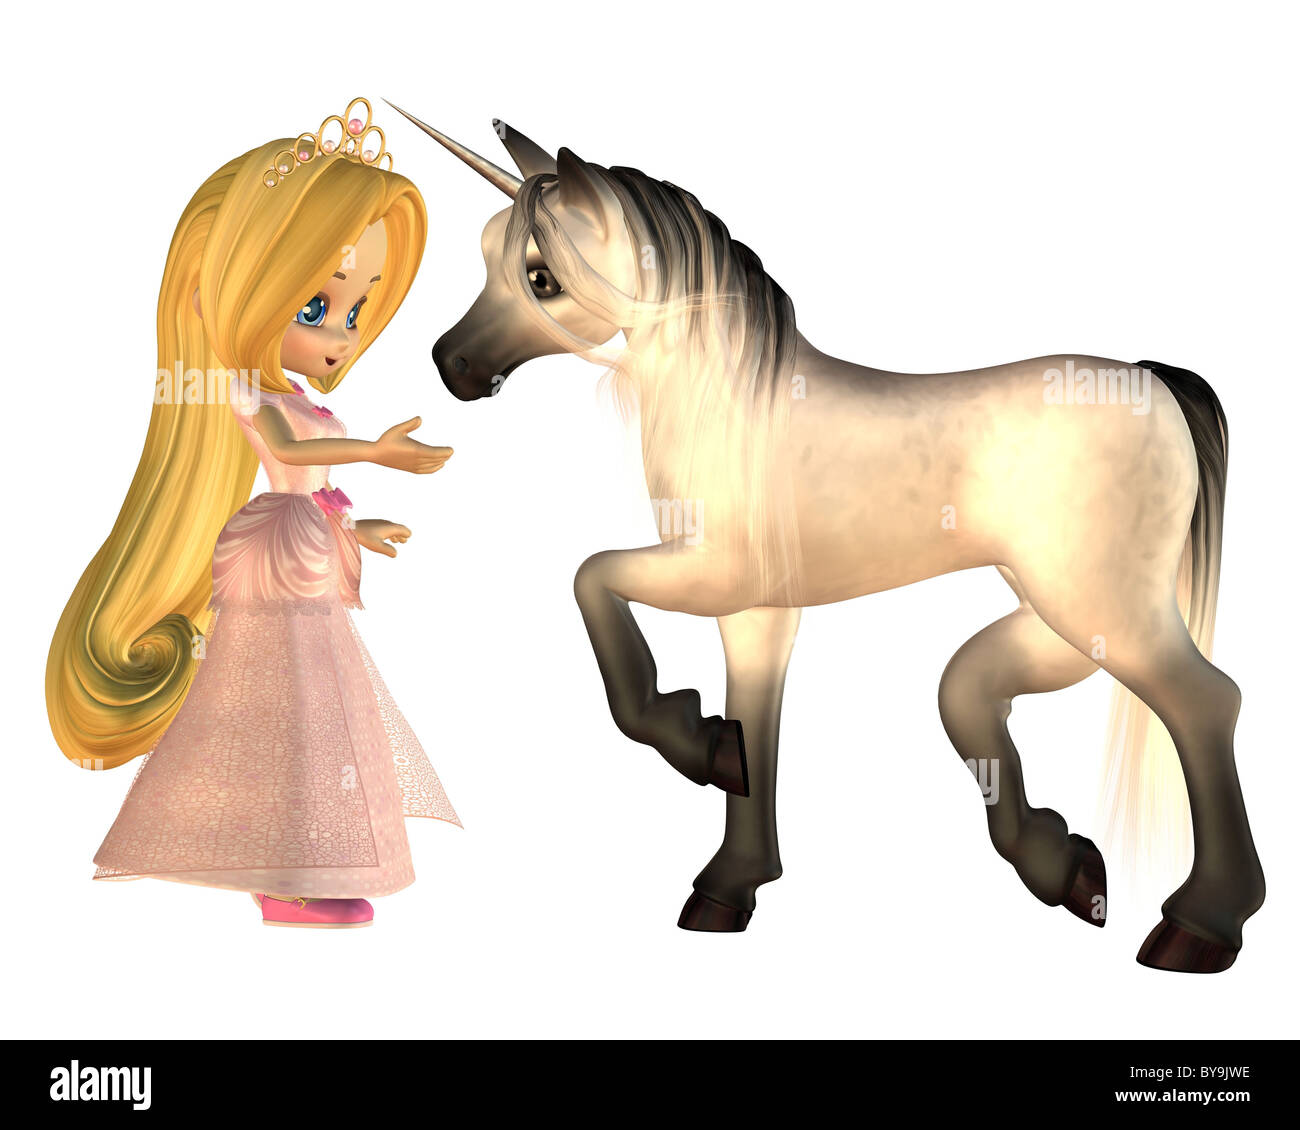 Cute Toon Fairytale Princess and Unicorn Stock Photo